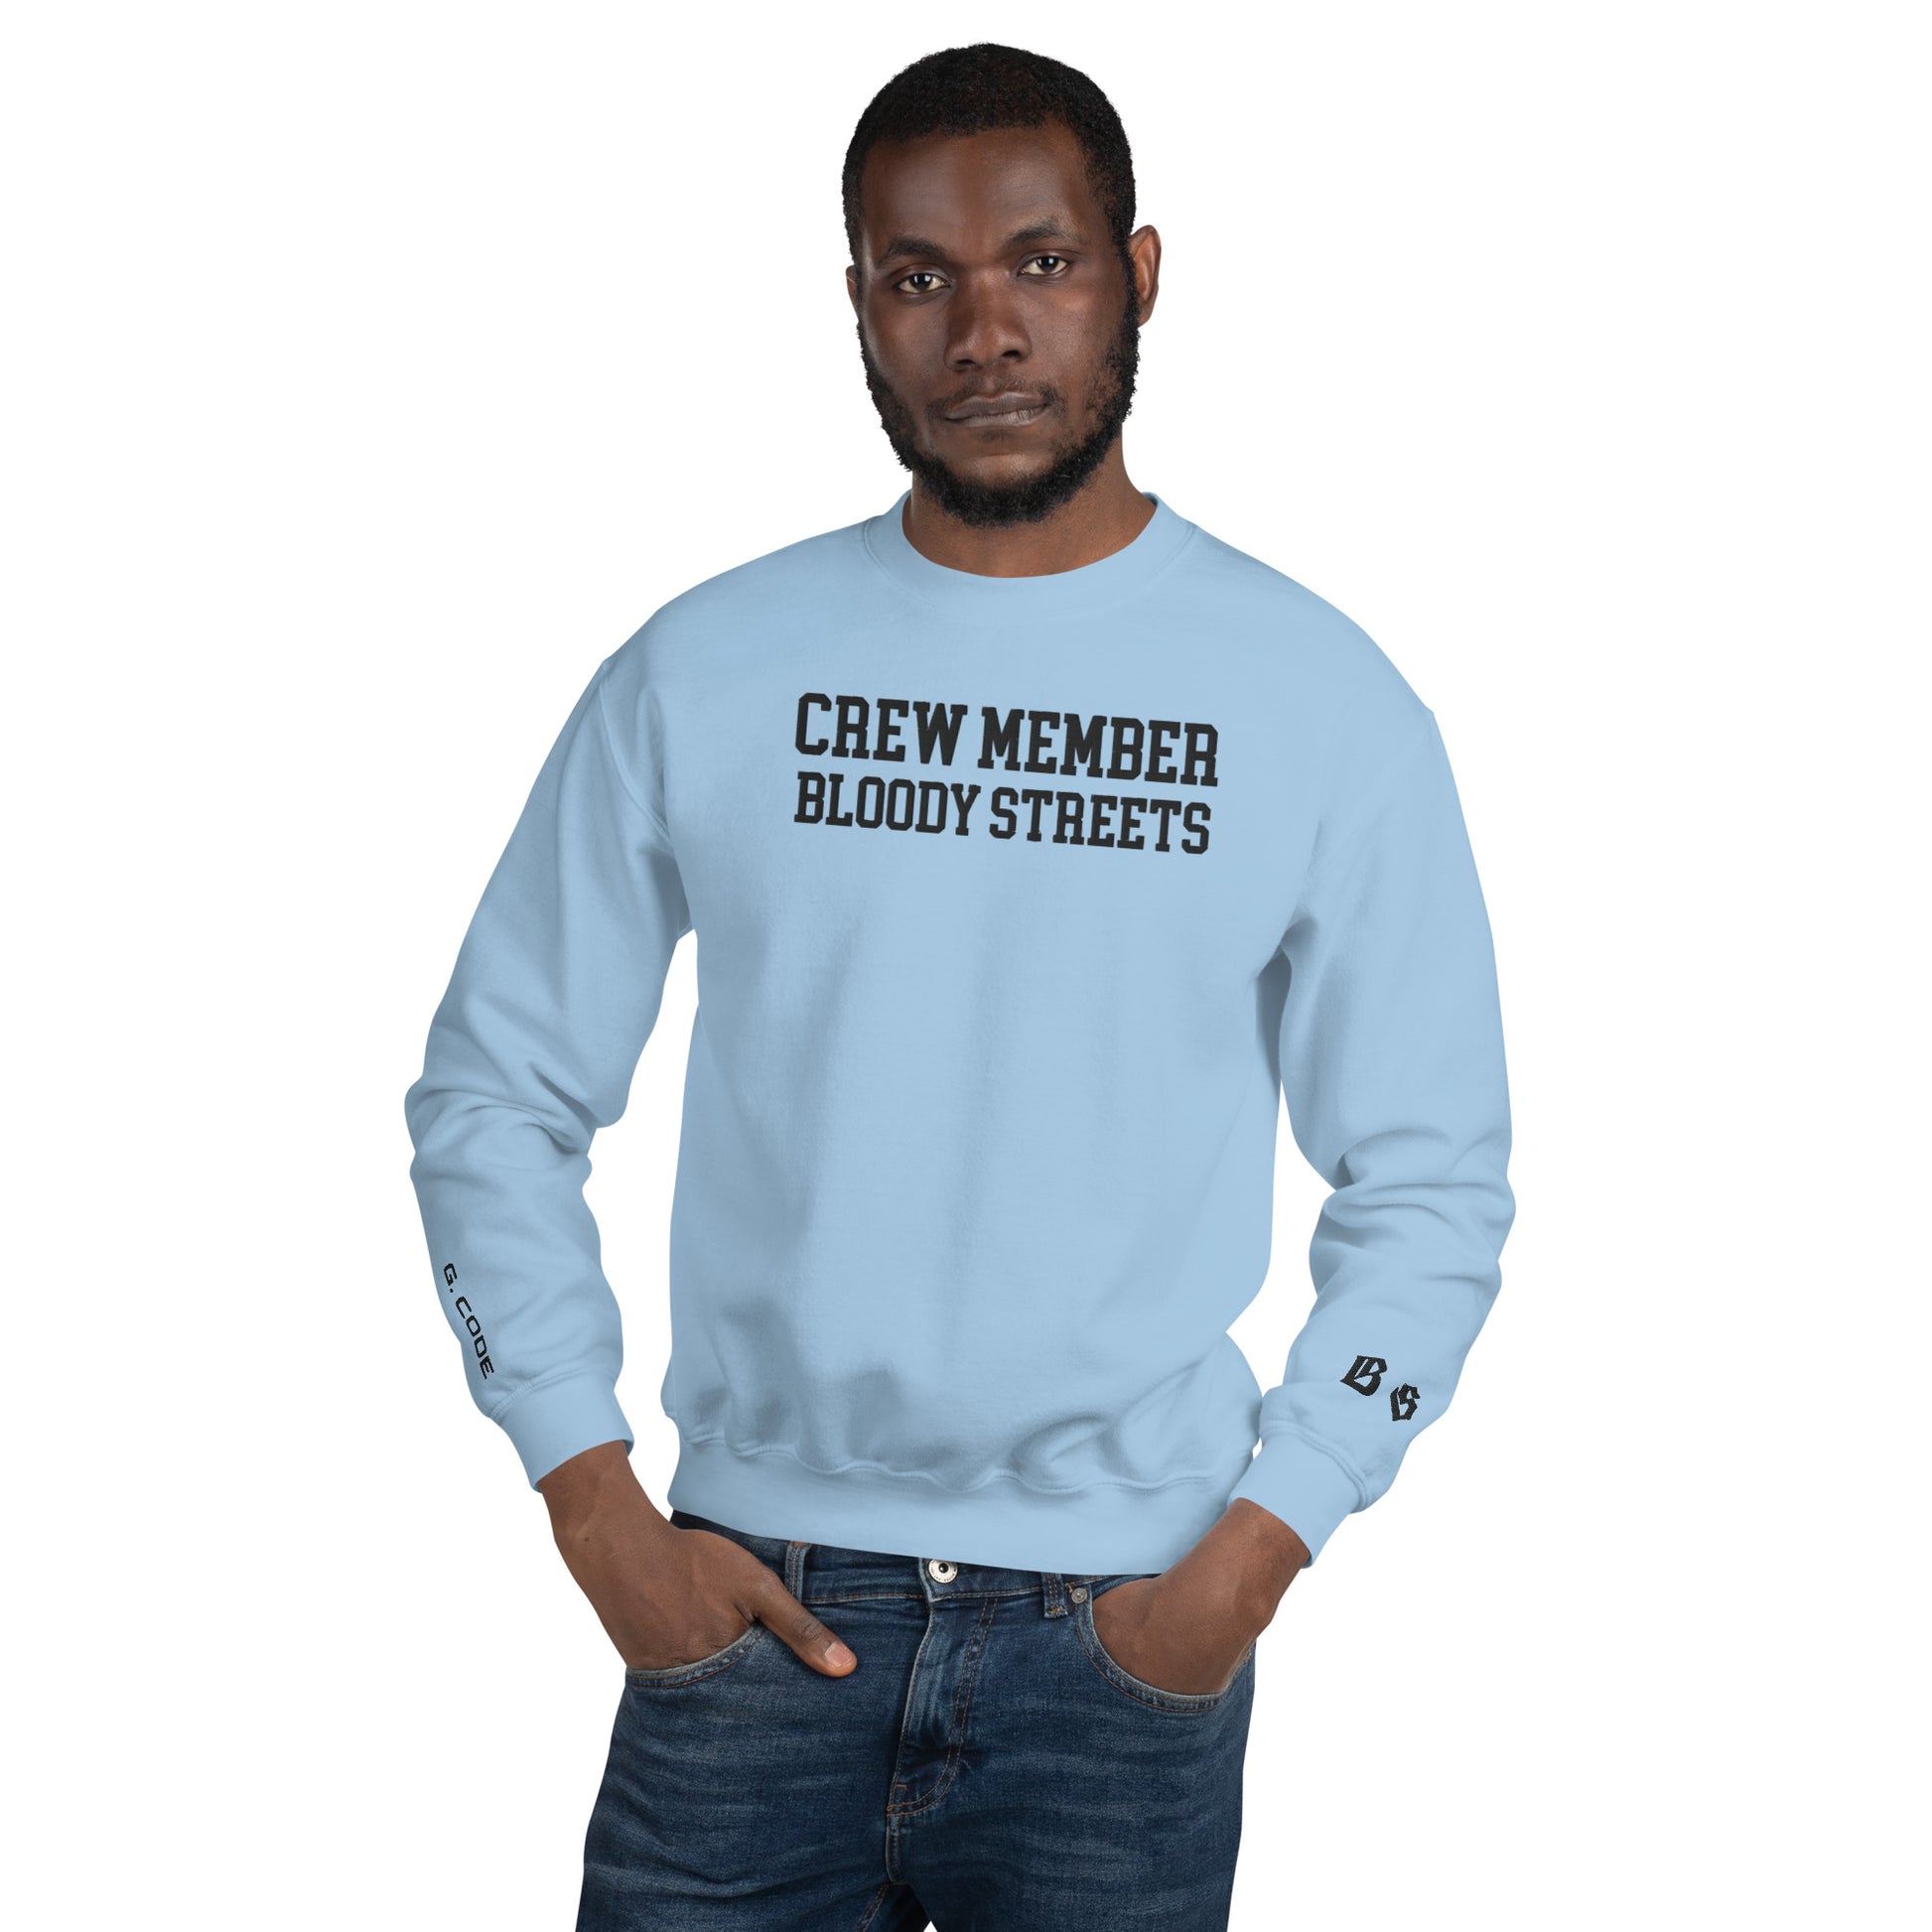 CLEAN Crew Member Stickerei Streetwear Pullover - BLOODY-STREETS.DE Streetwear Herren und Damen Hoodies, T-Shirts, Pullis